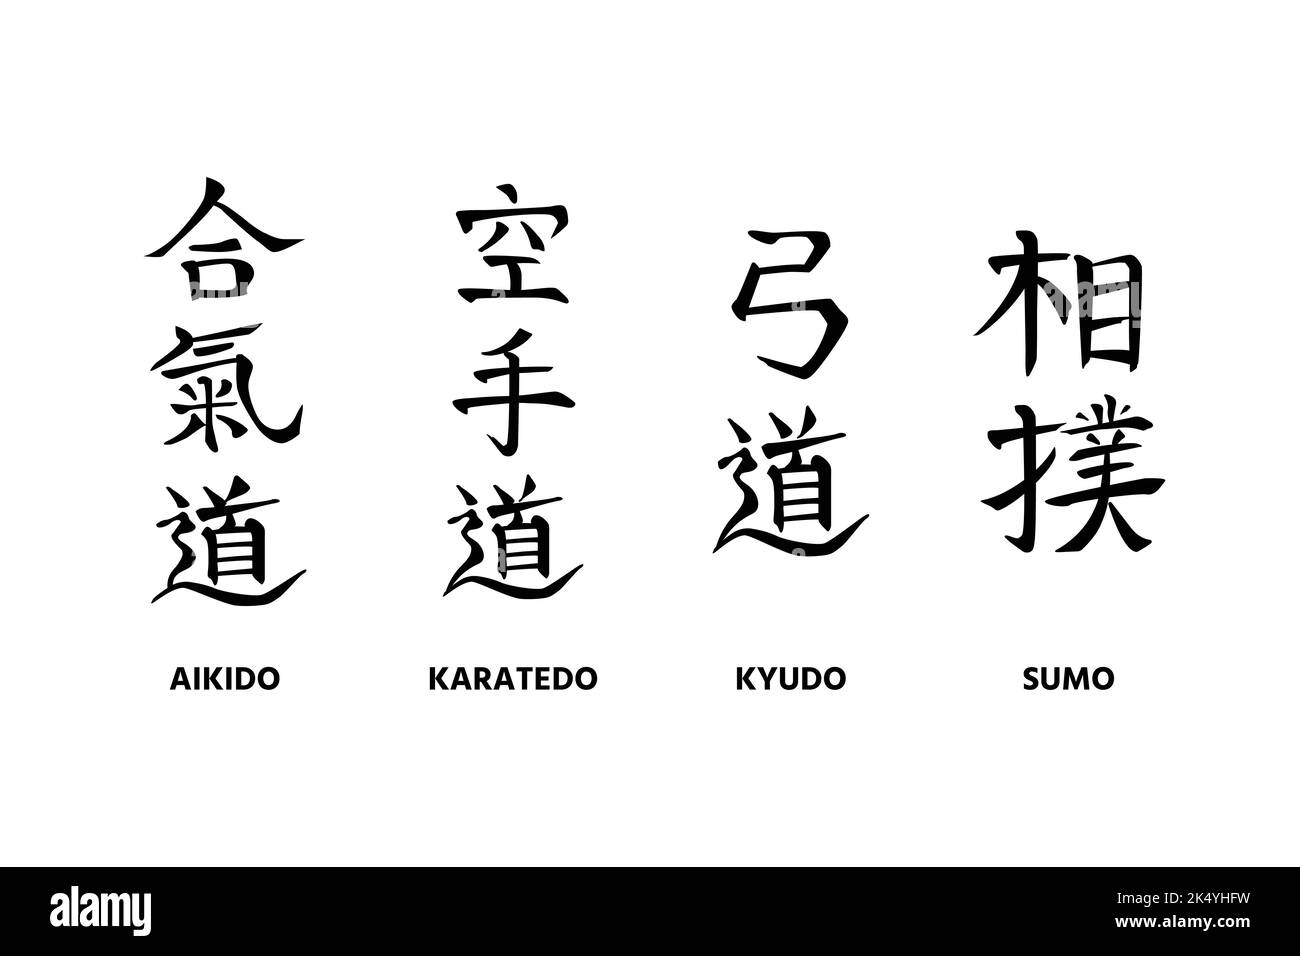 Aikido, Karate-do, Kyudo, Sumo. Collection of editable calligraphic hieroglyphs, kanji logos, names of Japanese martial arts Stock Vector